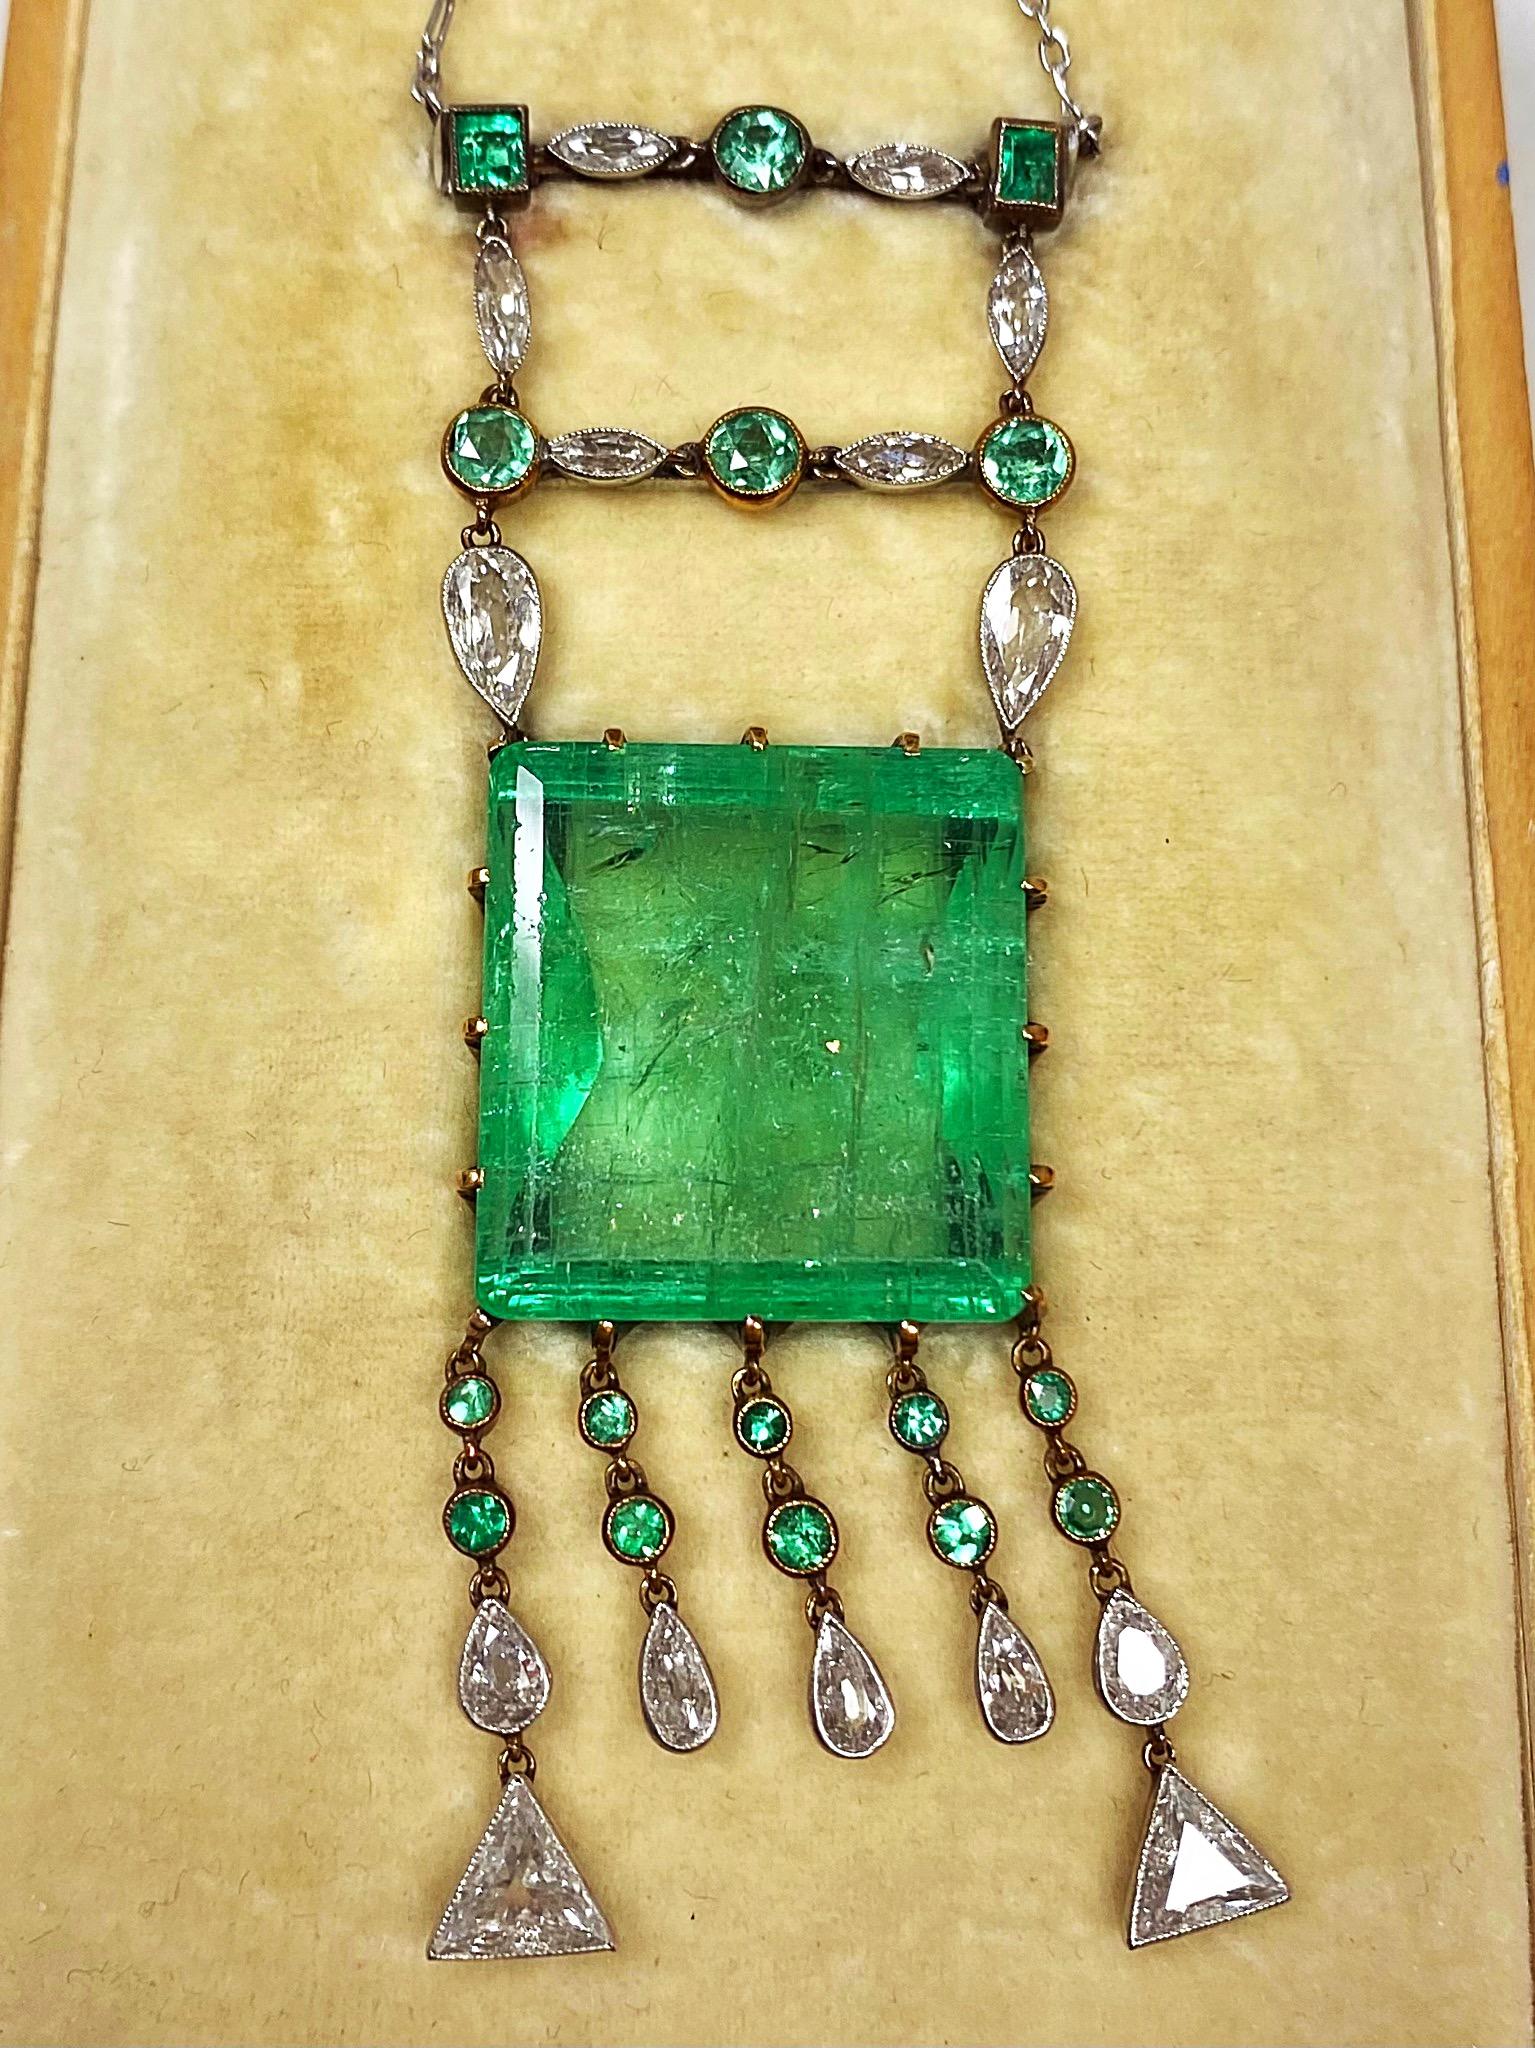 Alexey Denisov-Uralsky Signed Russian Ural Emerald Pendant In Excellent Condition For Sale In Miami, FL